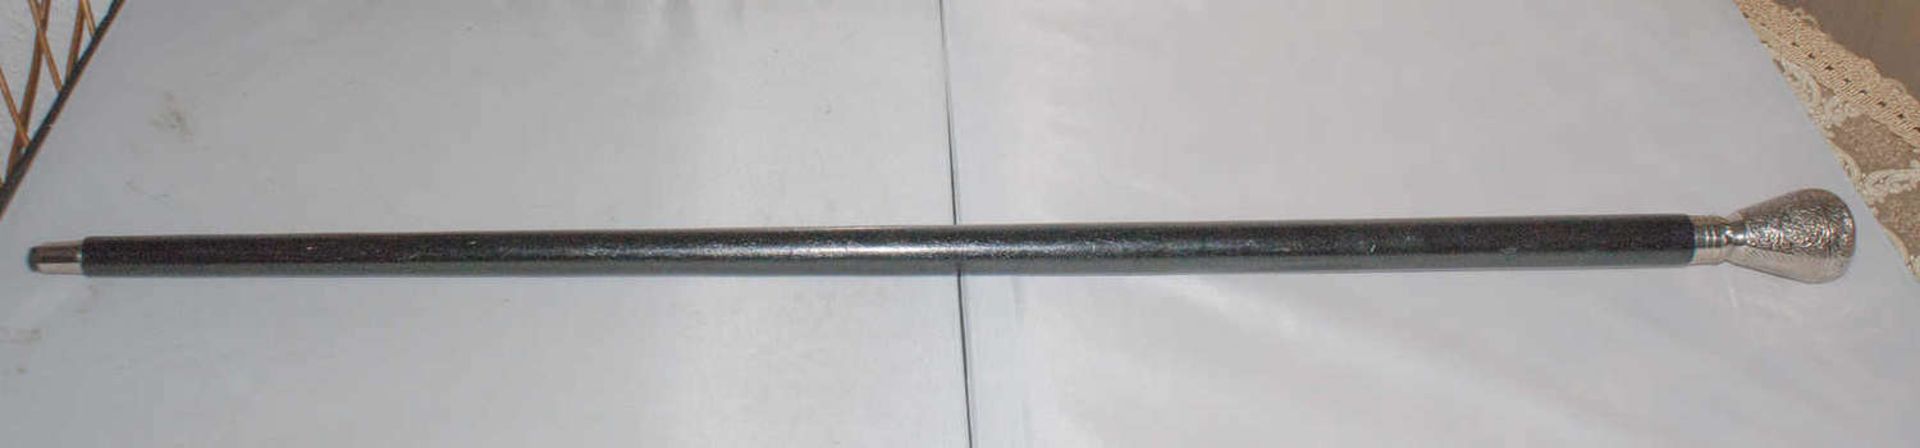 Edler Gehstock, Knauf versilbert, Höhe ca. 92,5 cmNoble walking stick, knob silvered, height about